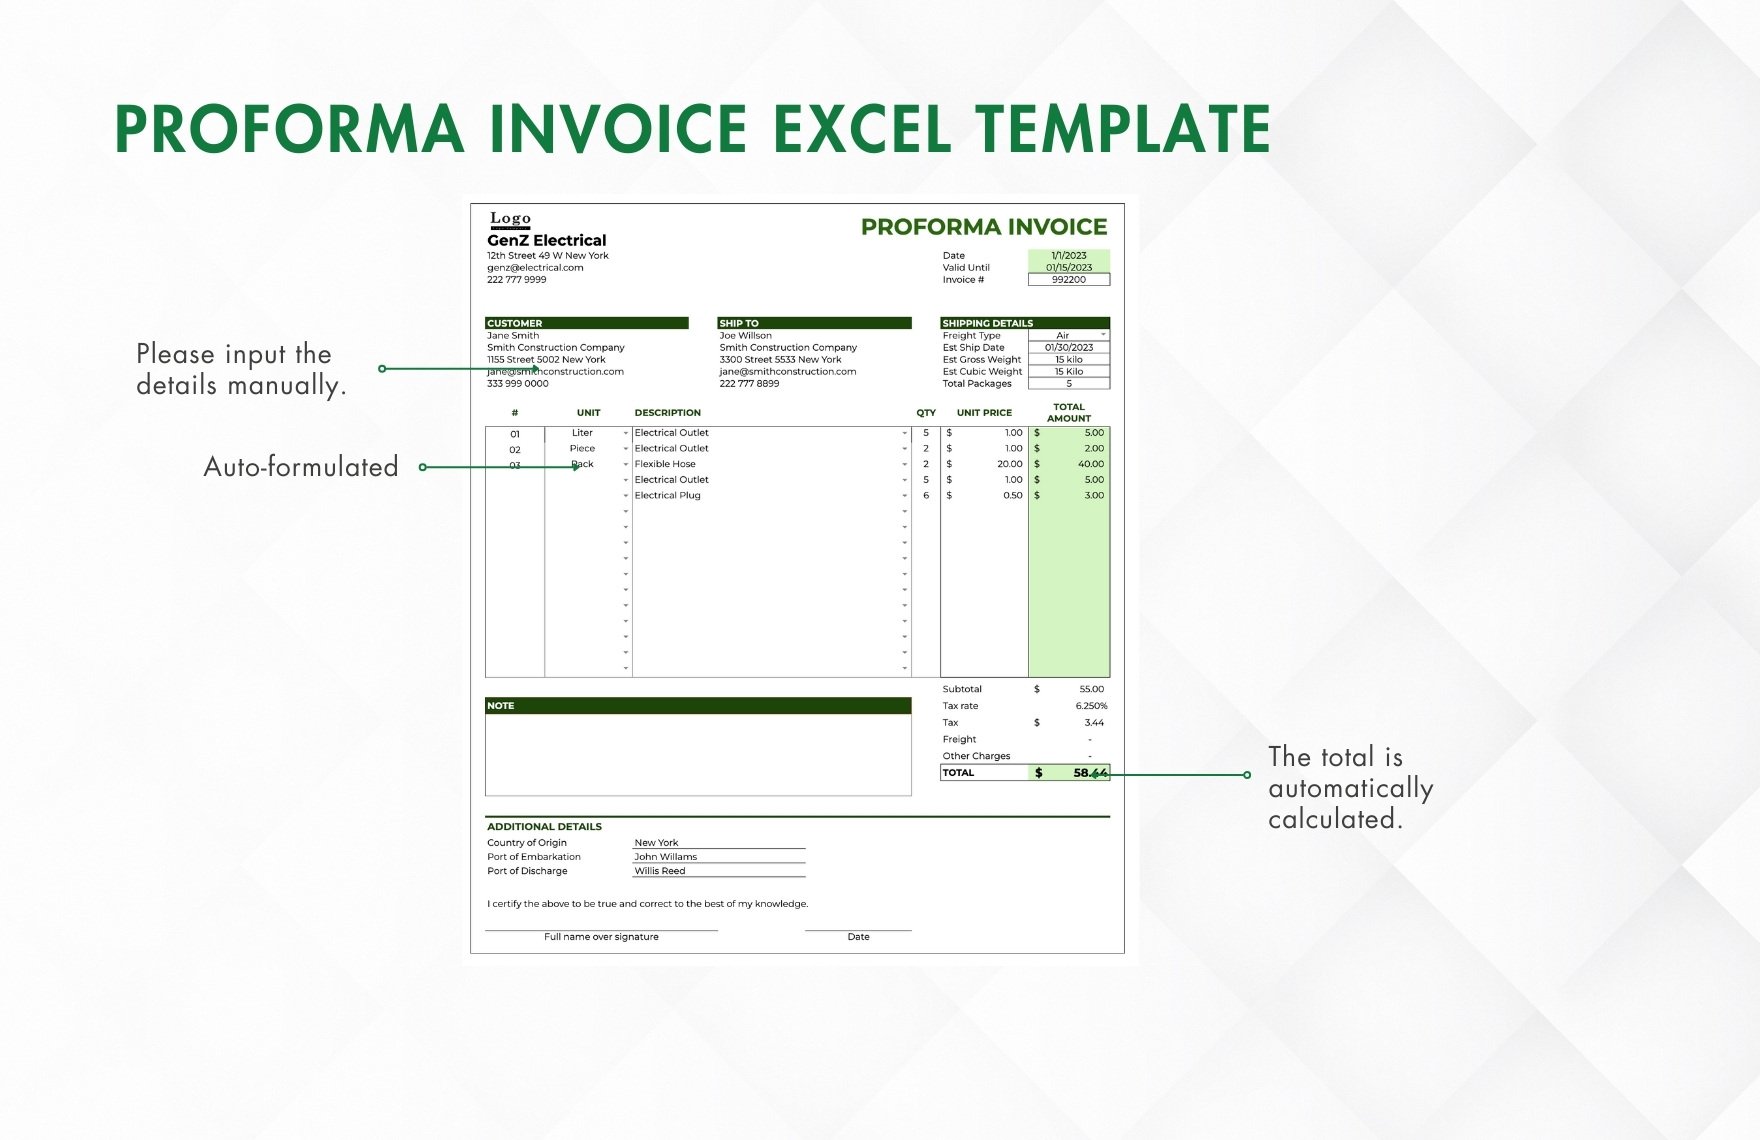 Proforma Invoice Excel Template